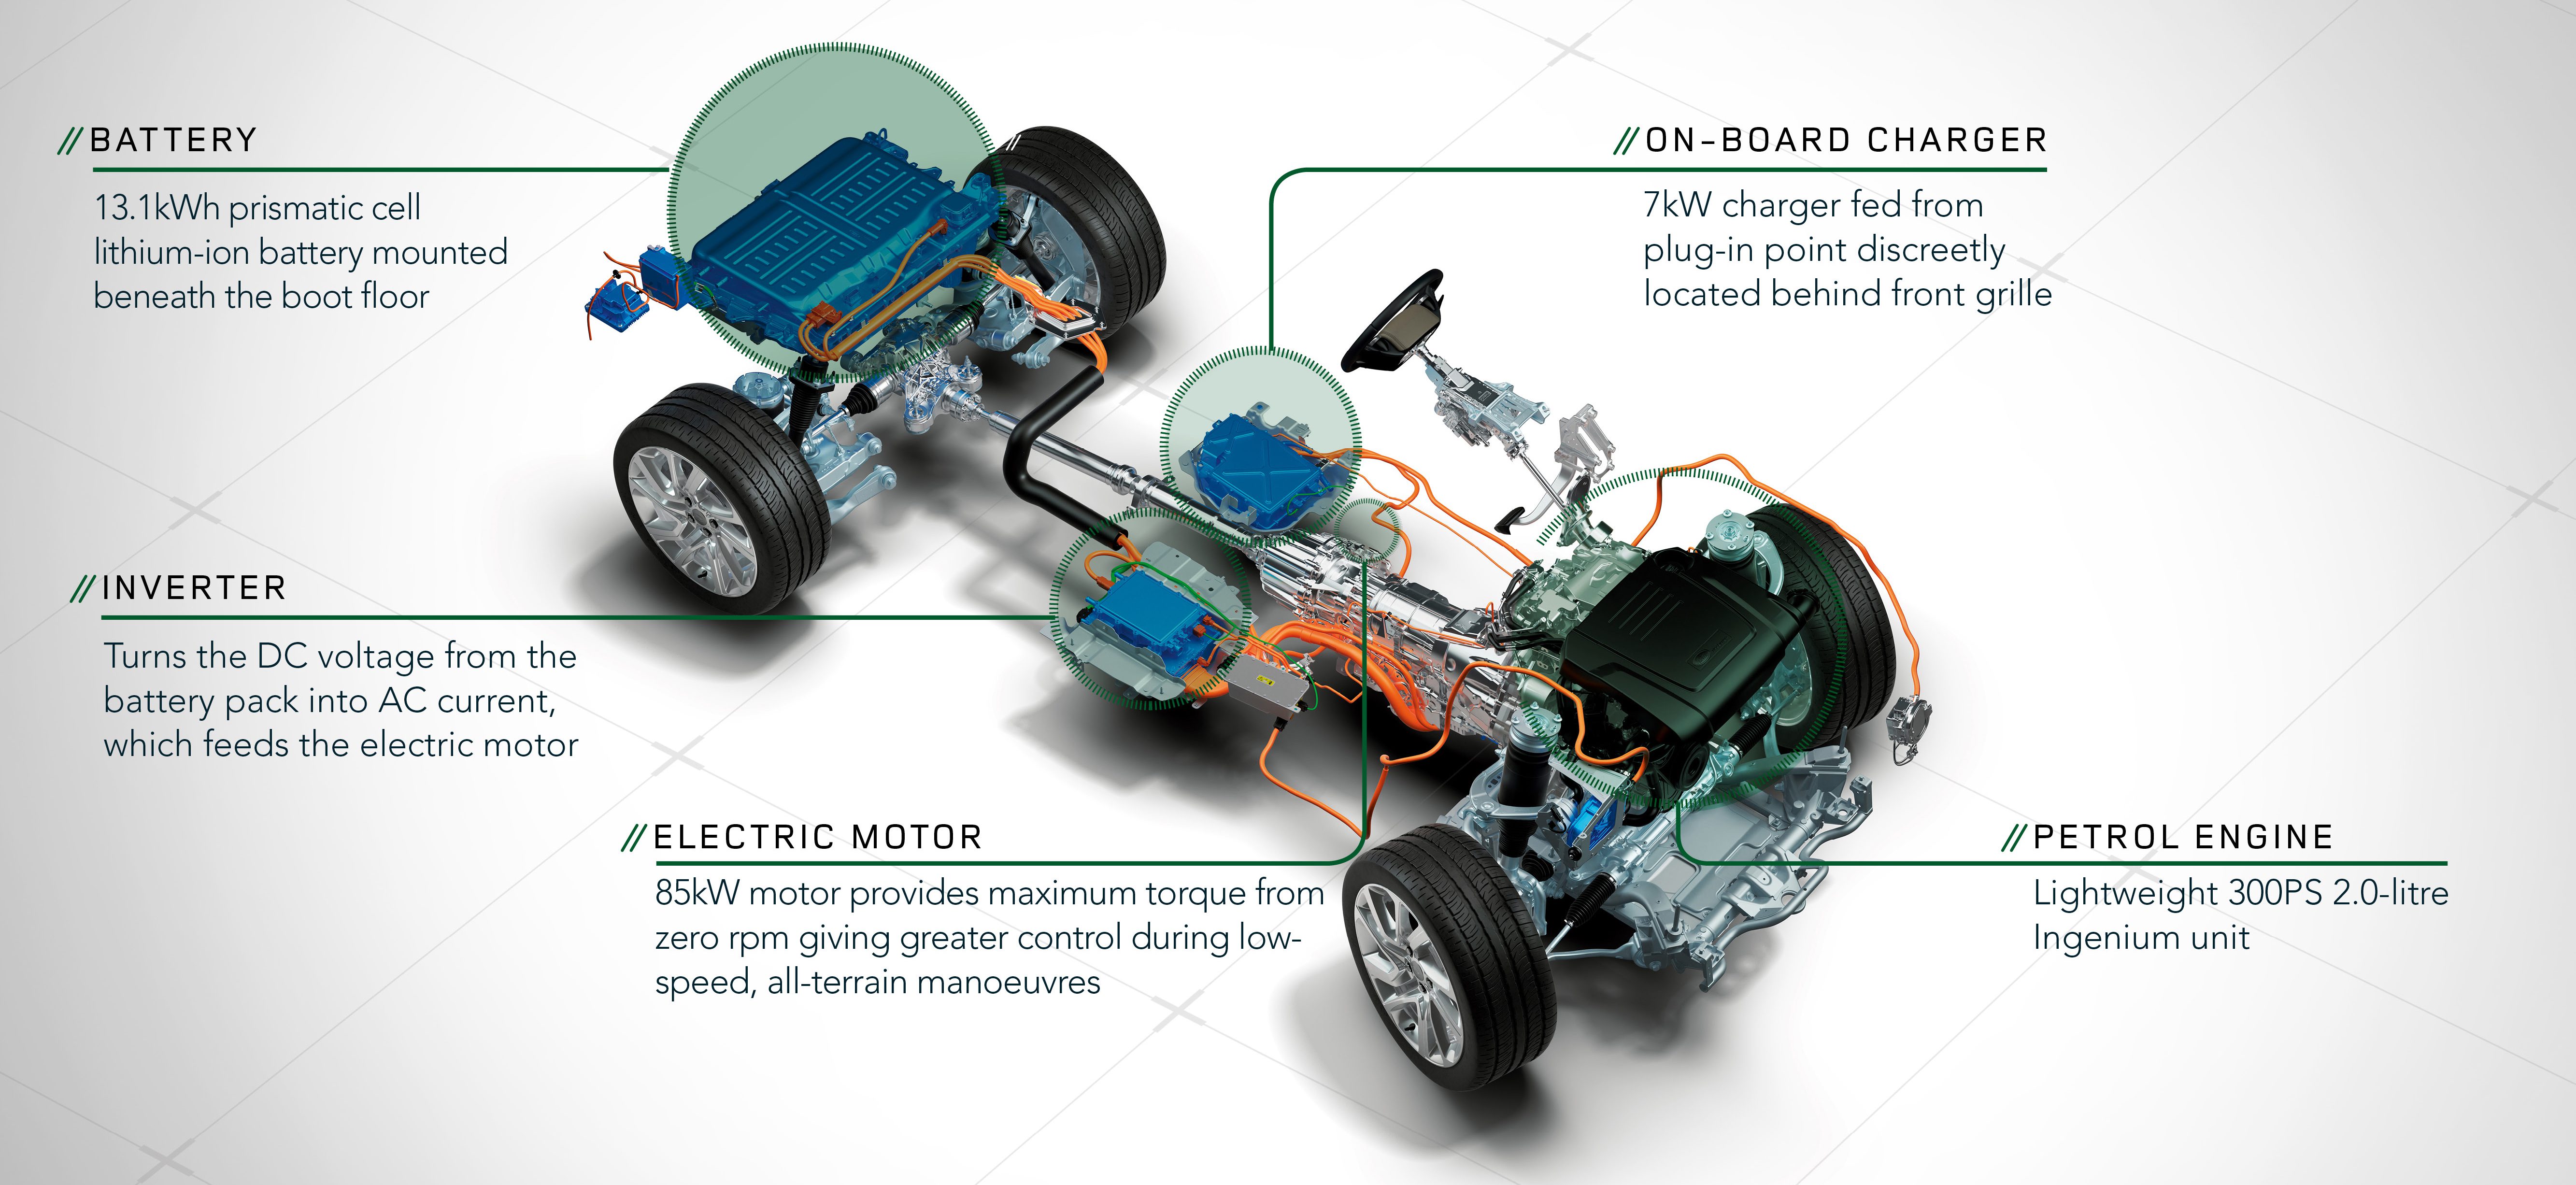 Intrekking De dauw Land Rover launches first plug-in hybrid Range Rover | Electrek